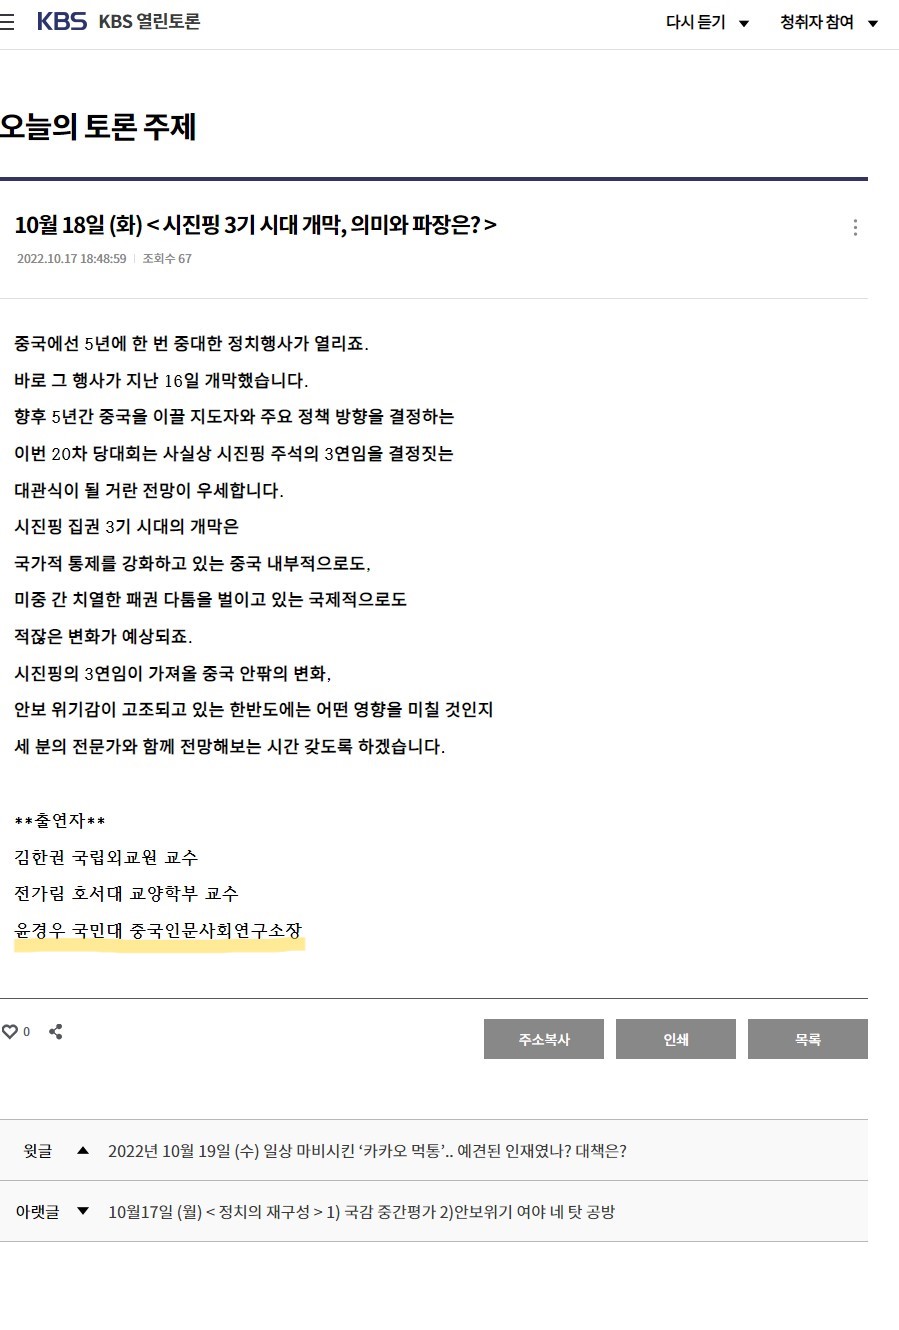 2022.10.17_KBS열린토론_10월 18(화)시진핑 3기시대 개막, 의미와 파장은...JPG